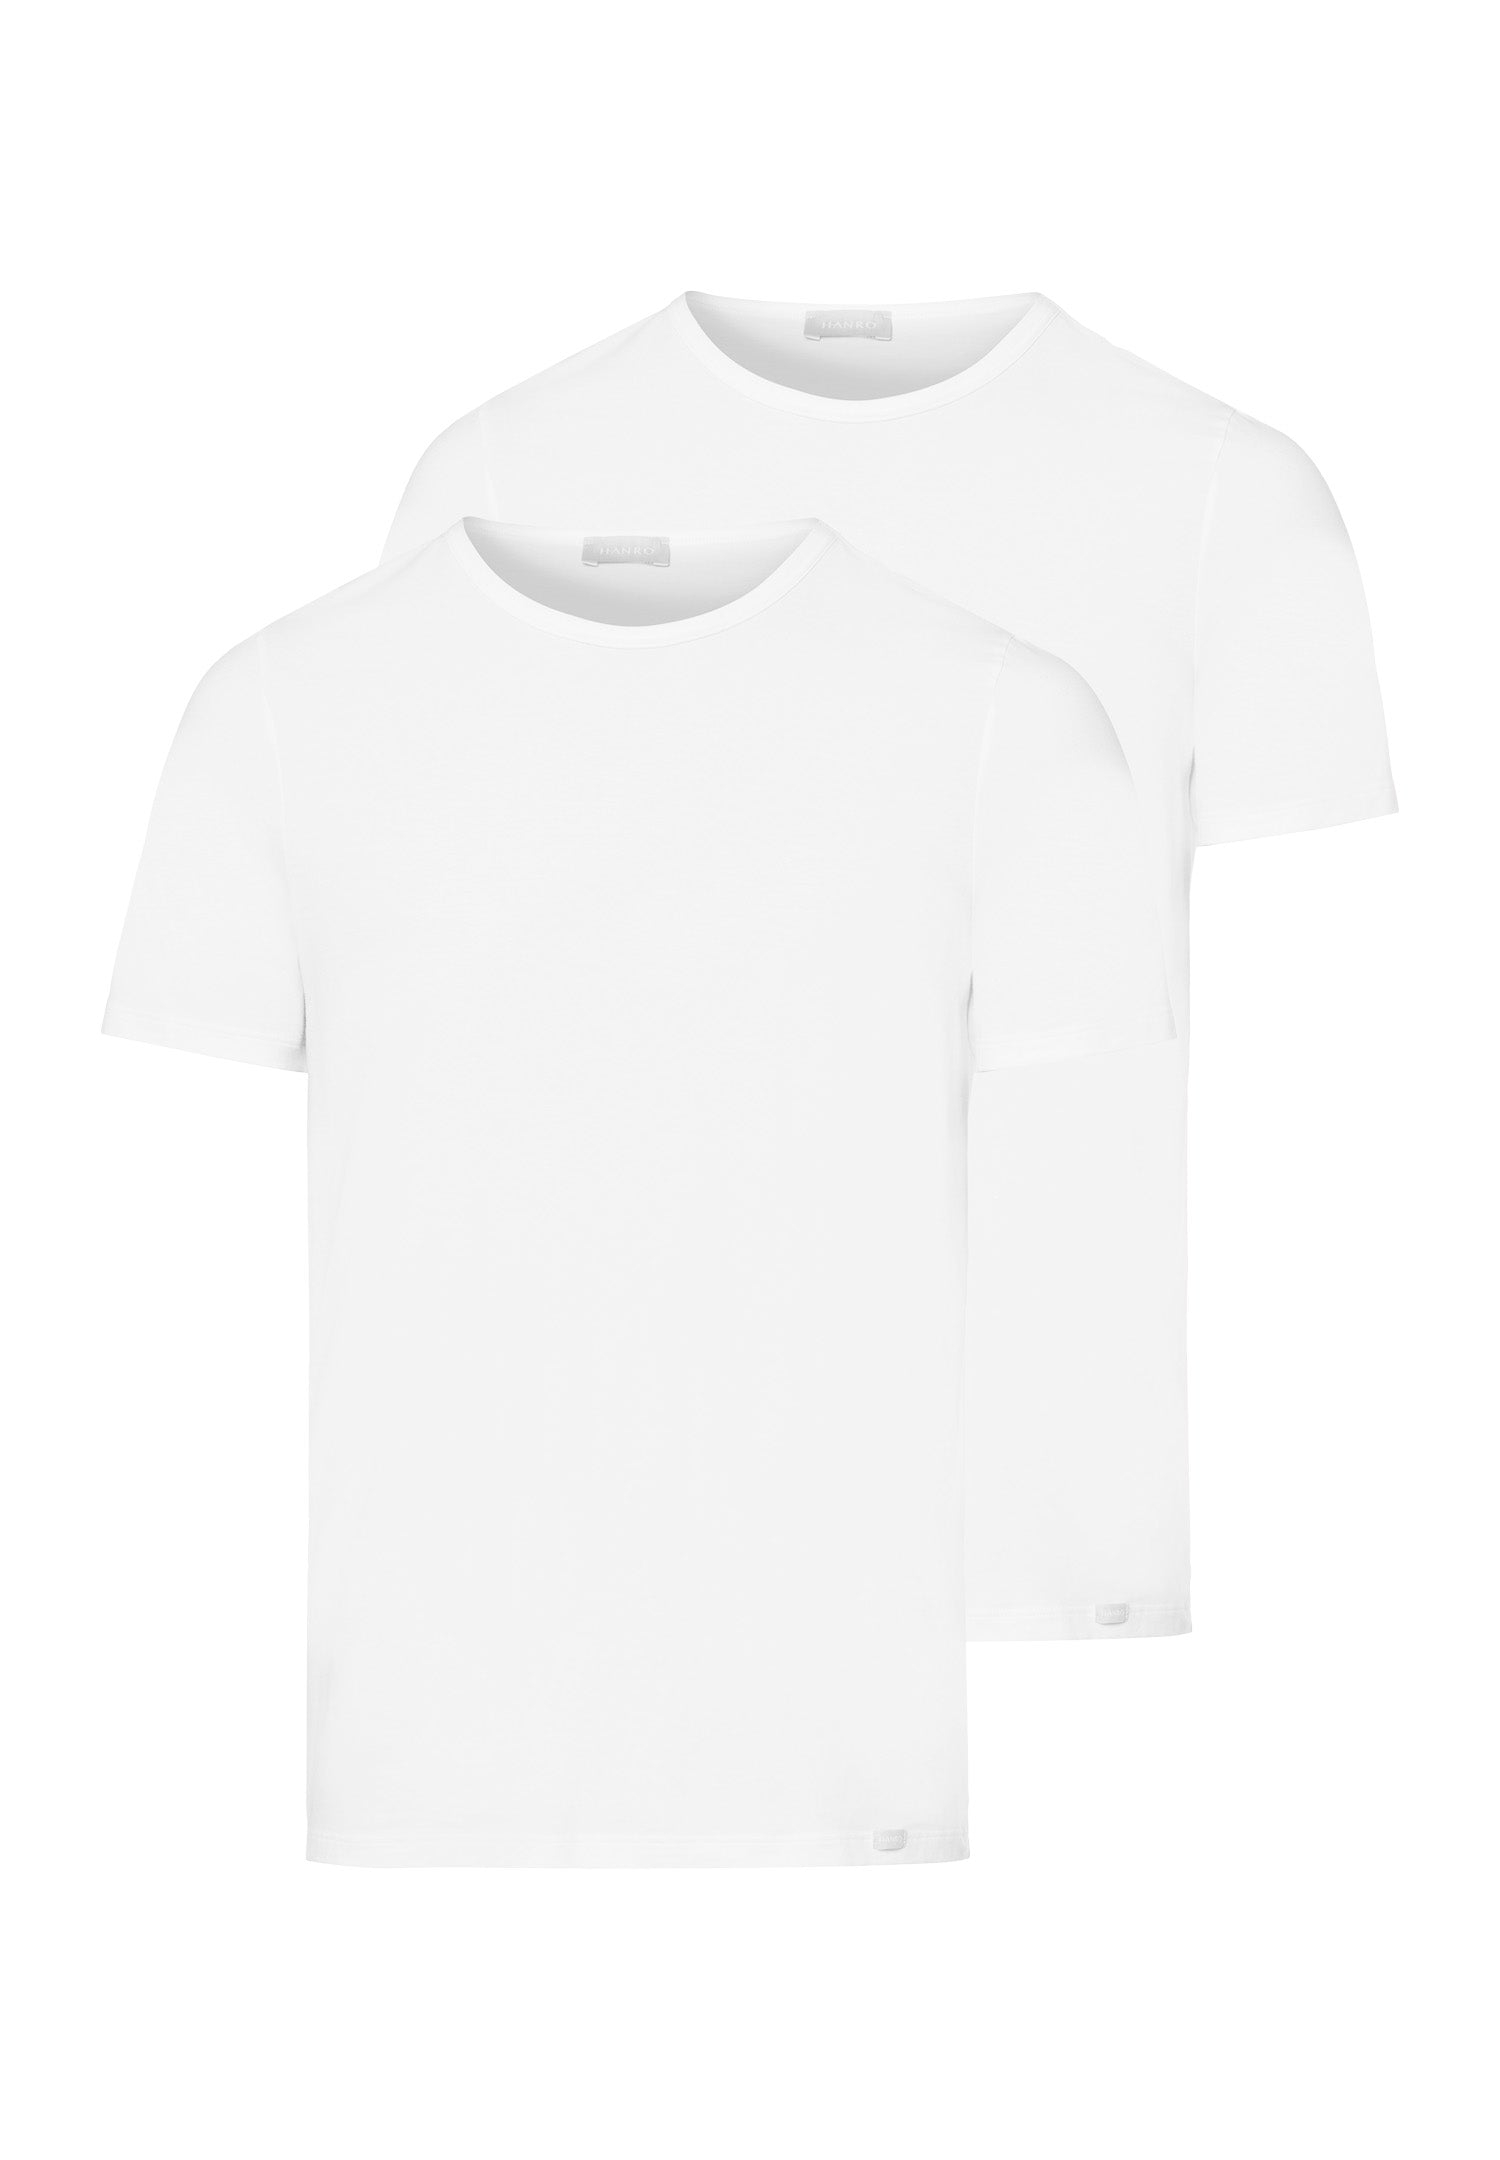 73110 Cotton Essentials Short Sleeve T-Shirt 2-Pack - 101 White